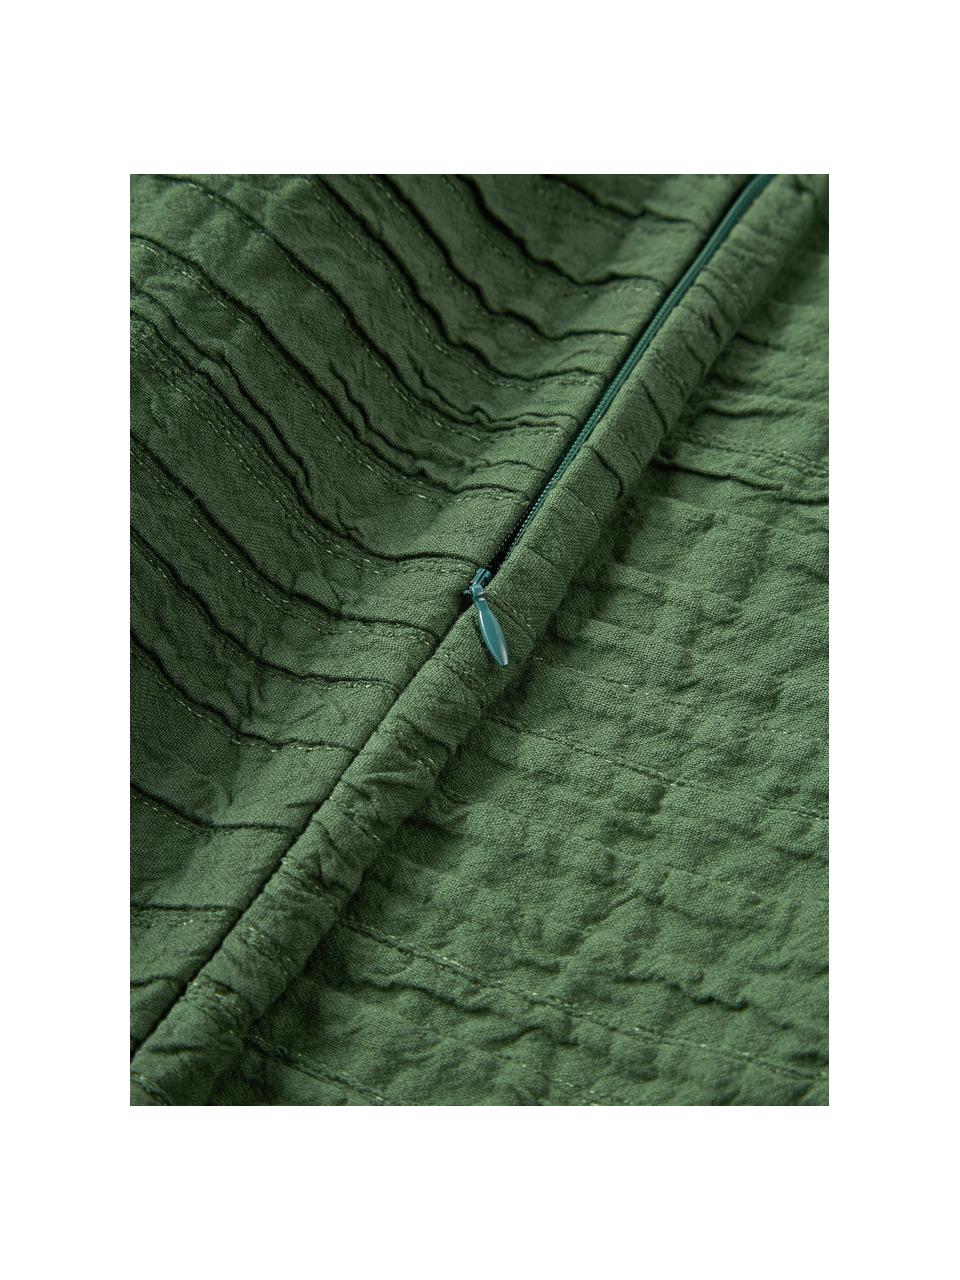 Plissierte Baumwoll-Kissenhülle Artemis, 99 % Baumwolle, 1 % Polyester, Dunkelgrün, B 50 x L 50 cm